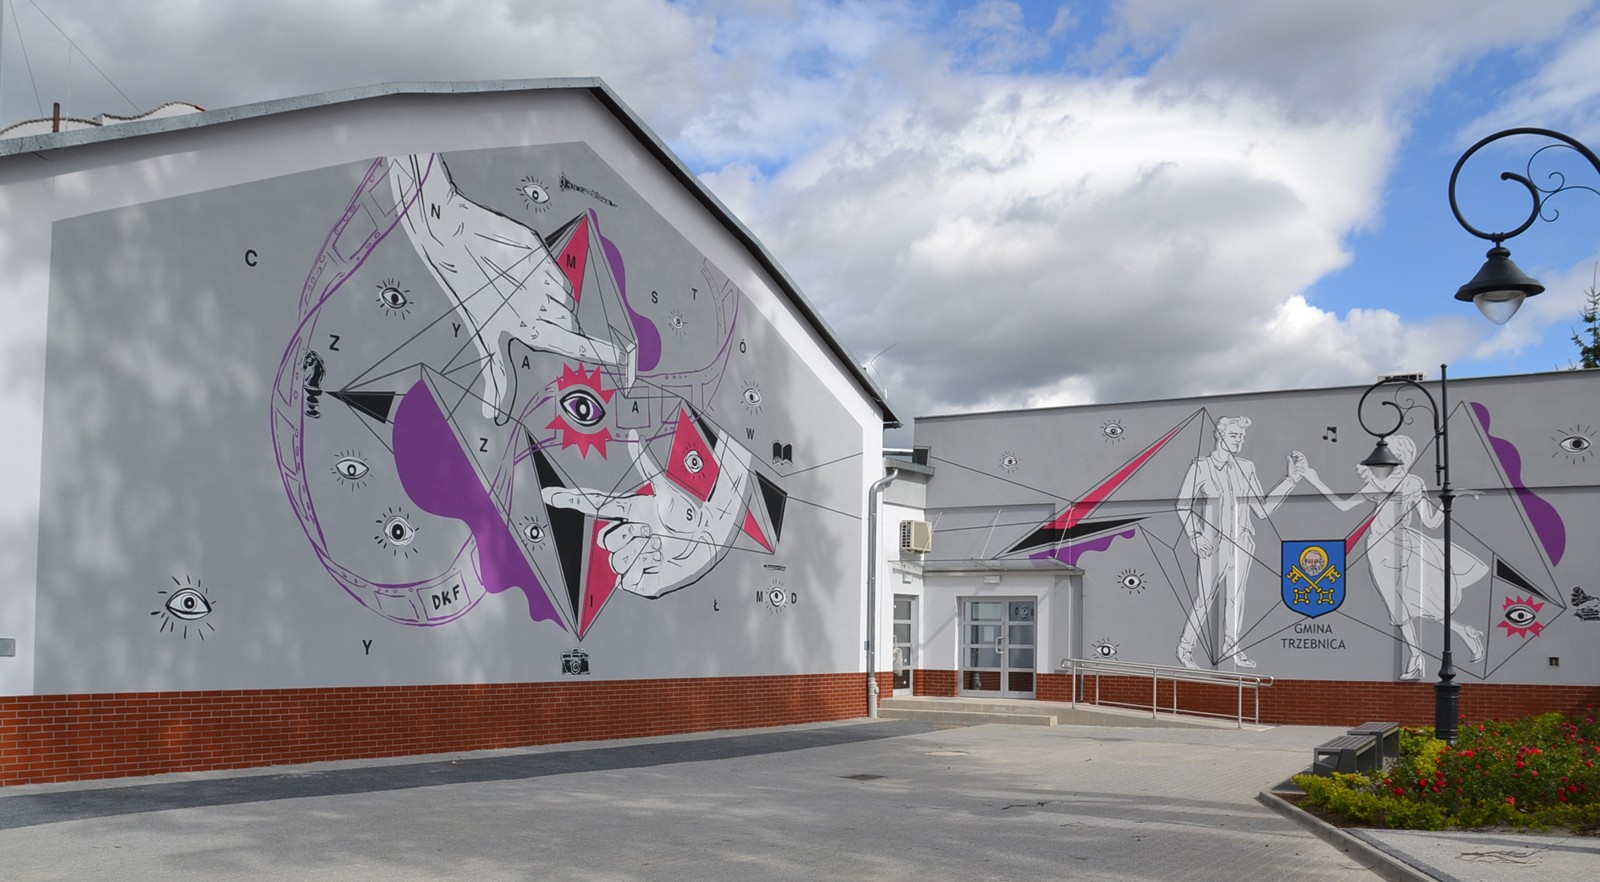 Trzebnica District mural on the wall | Community mural | Portfolio